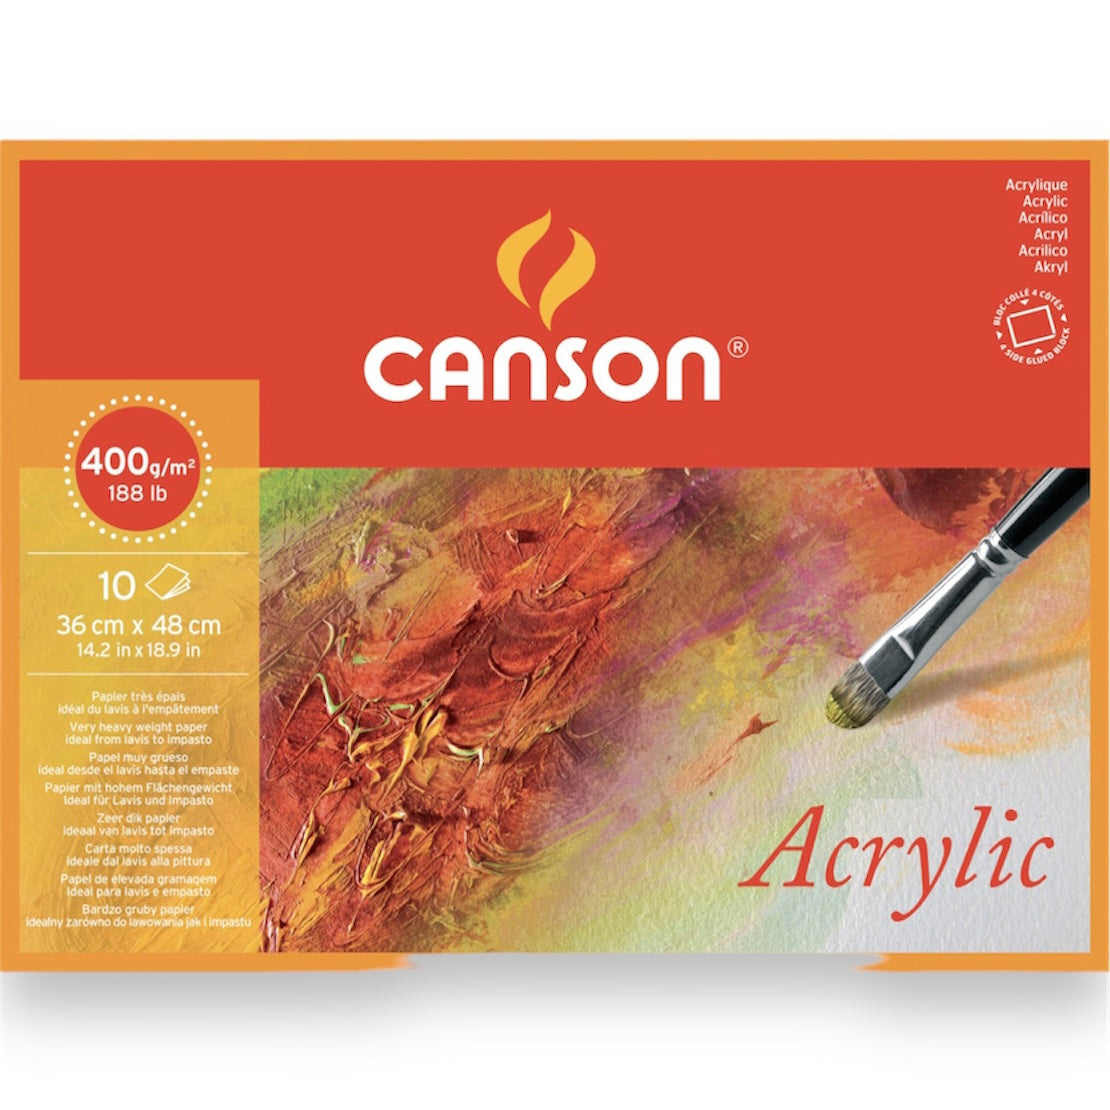 Canson Acrylic Sketch Pad 36*48 Cm || كراسة كانسون اكريليك حجم ٣٦*٤٨ 